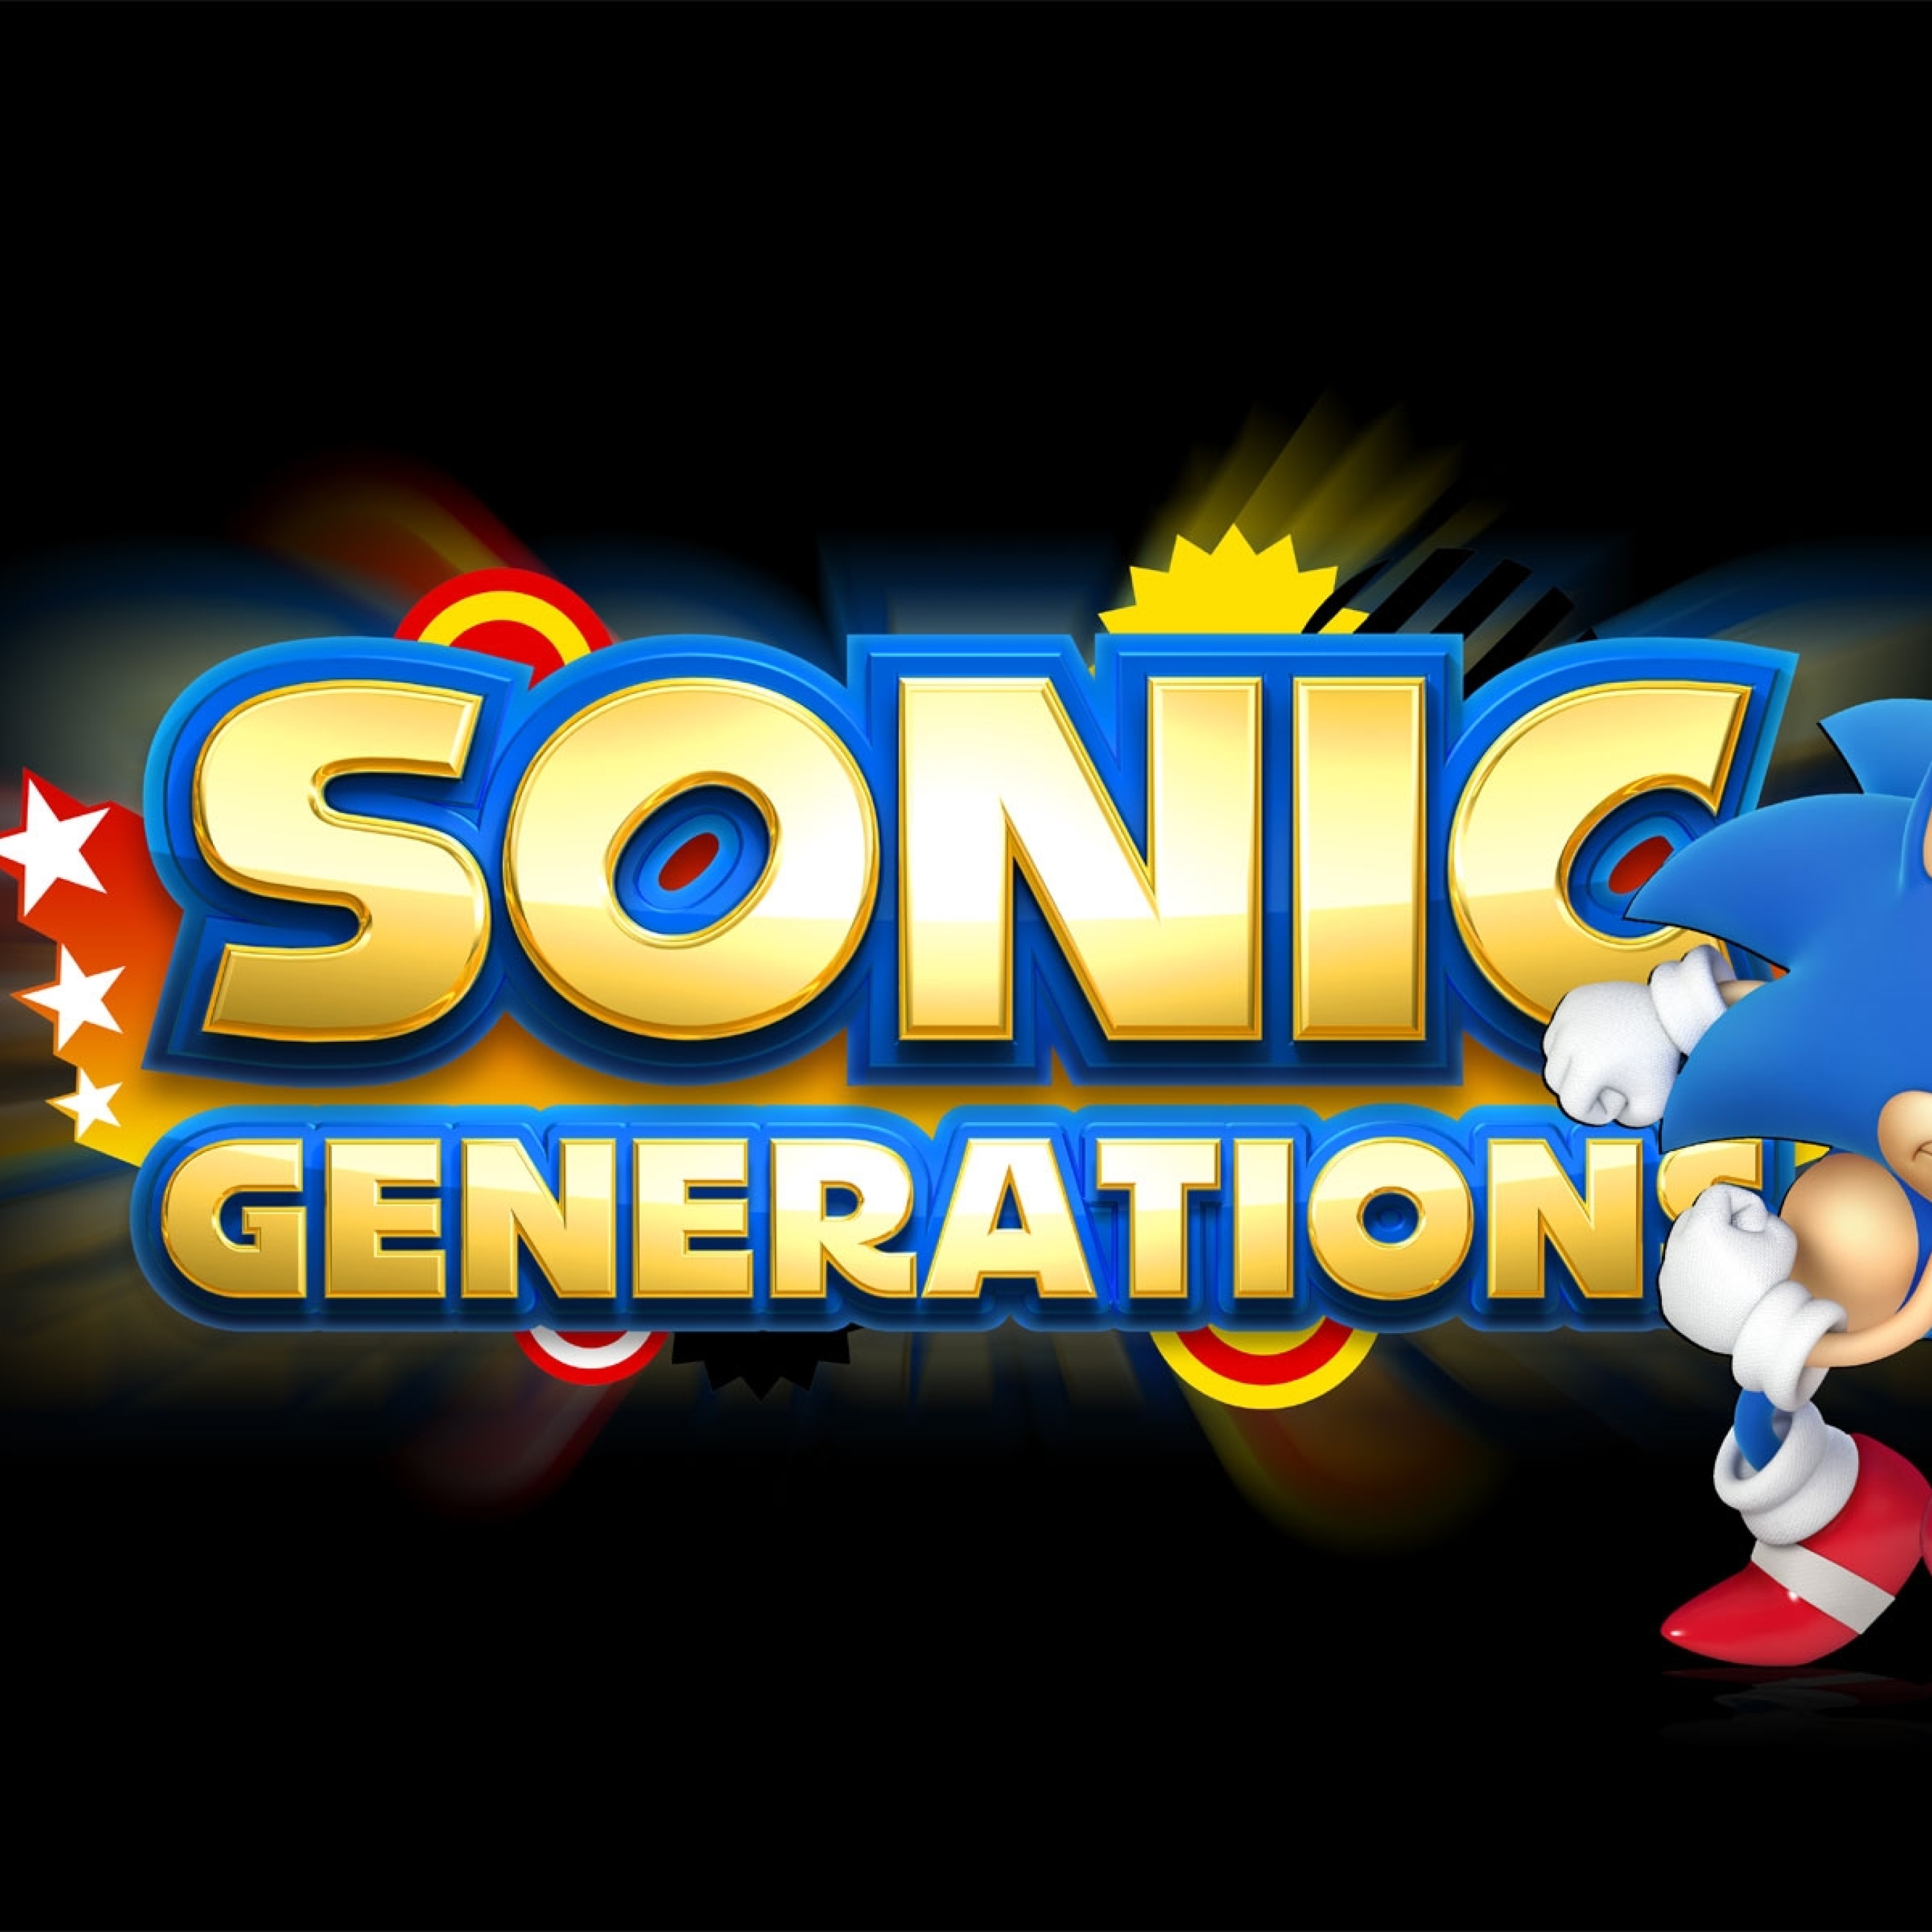 Sonic generations download. Соник генерейшен 2. Соник генерейшен. Соник генерейшен 2д. Игра Соник генератионс.